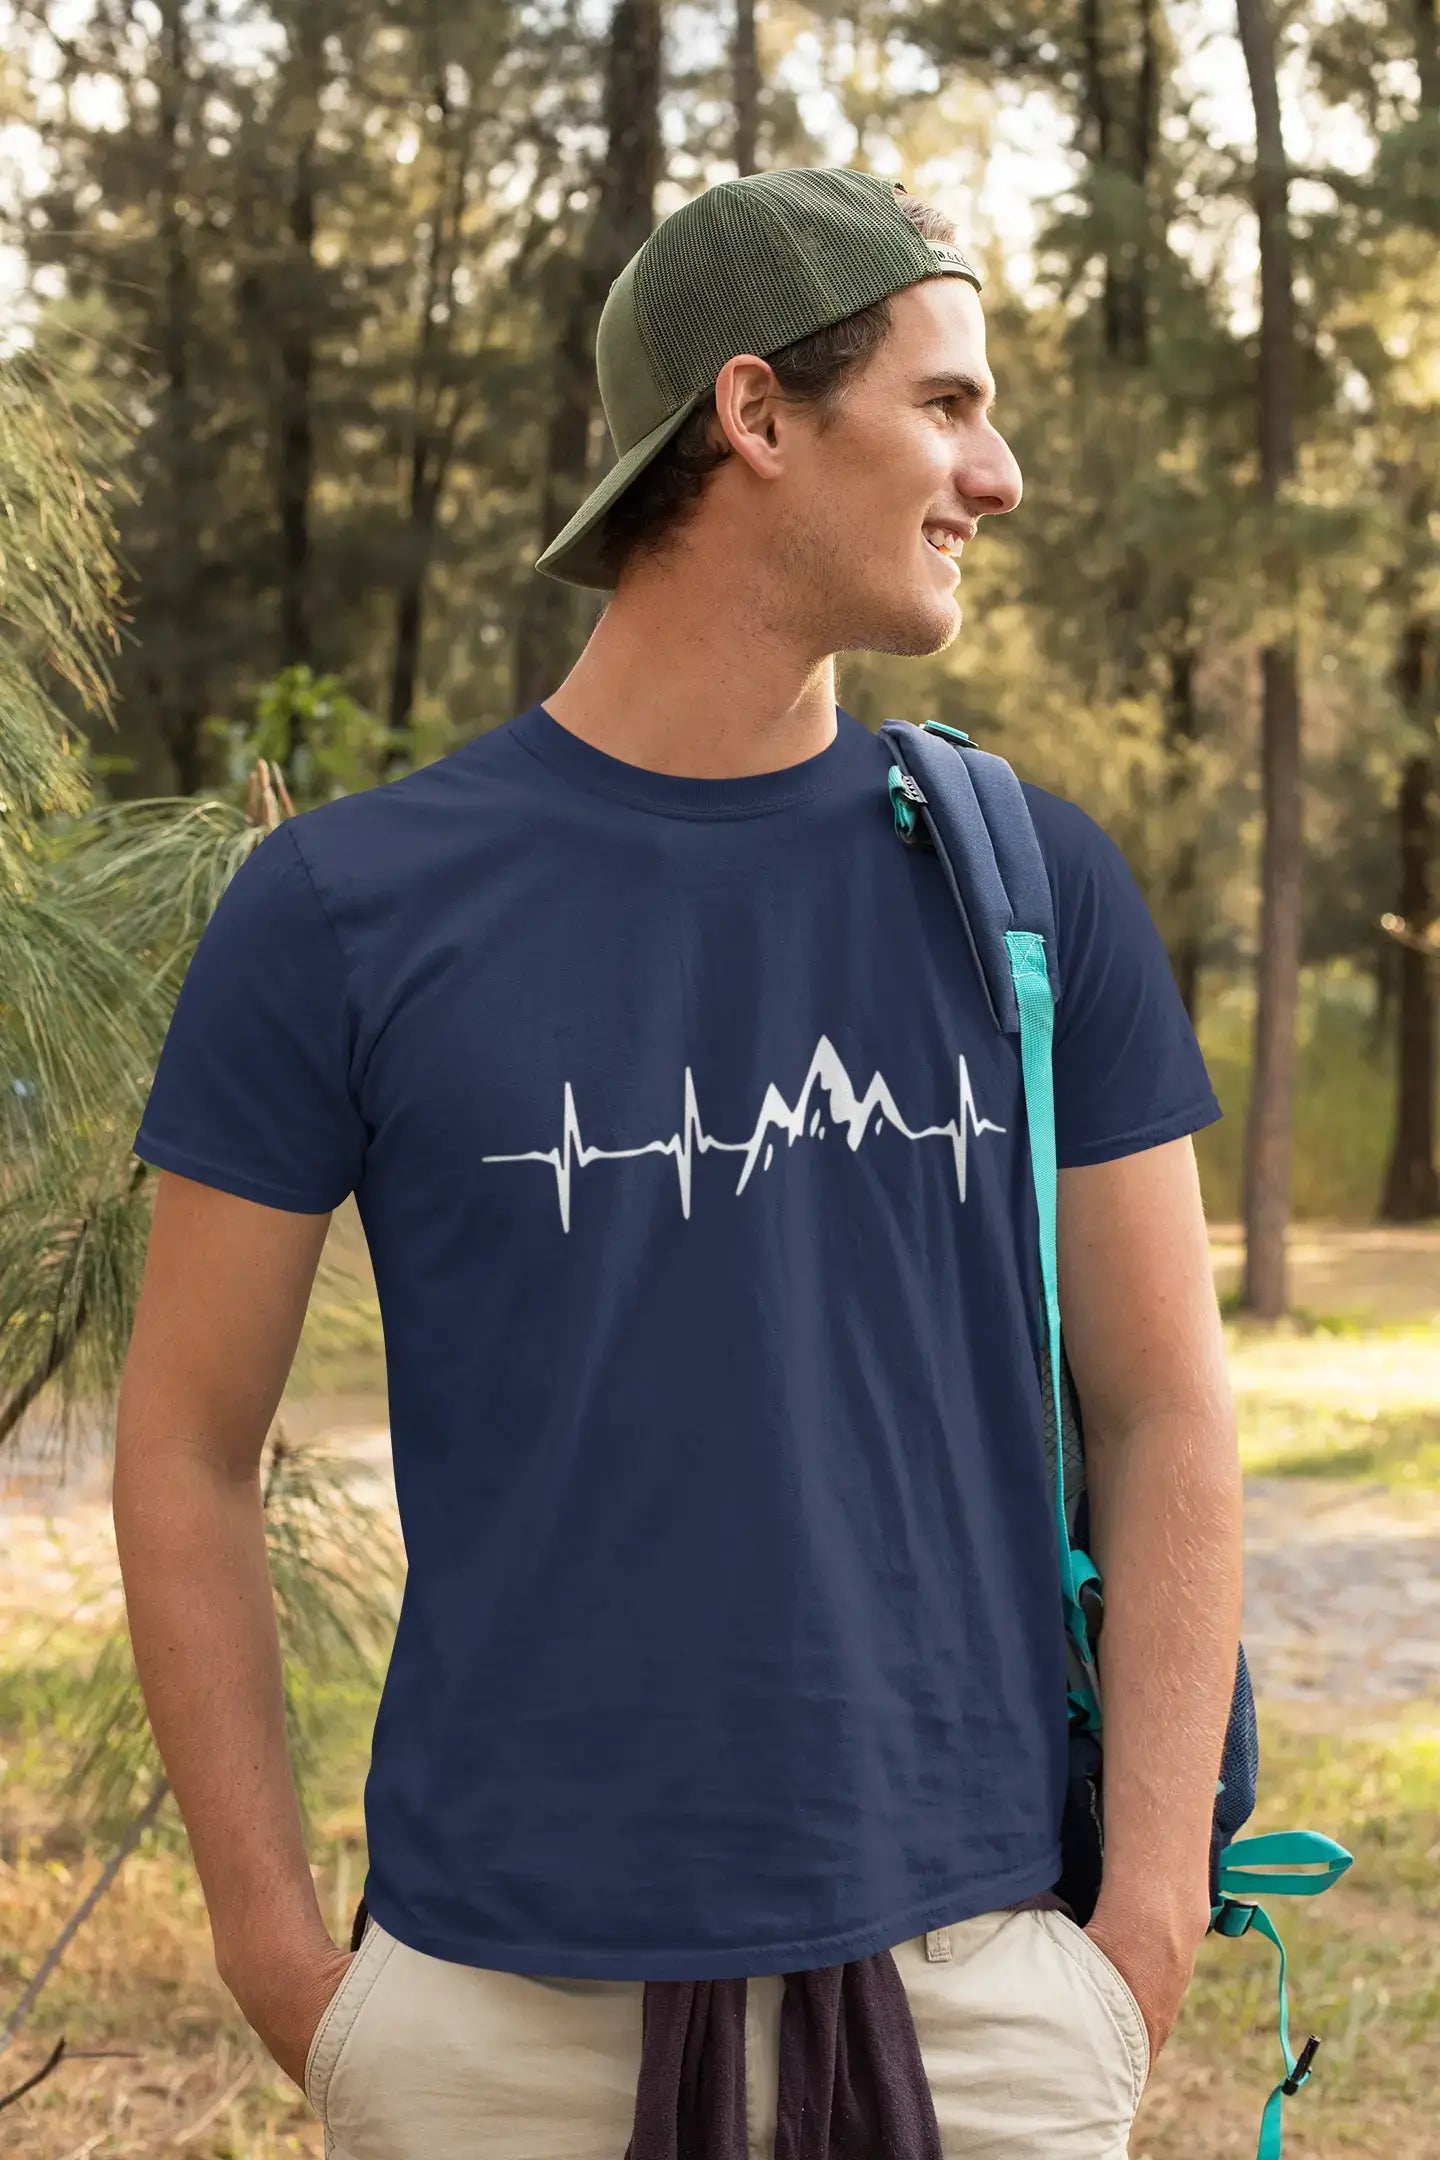 ULTRABASIC - Graphic Printed Men's Mountain Heartbeat T-Shirt Burgundy